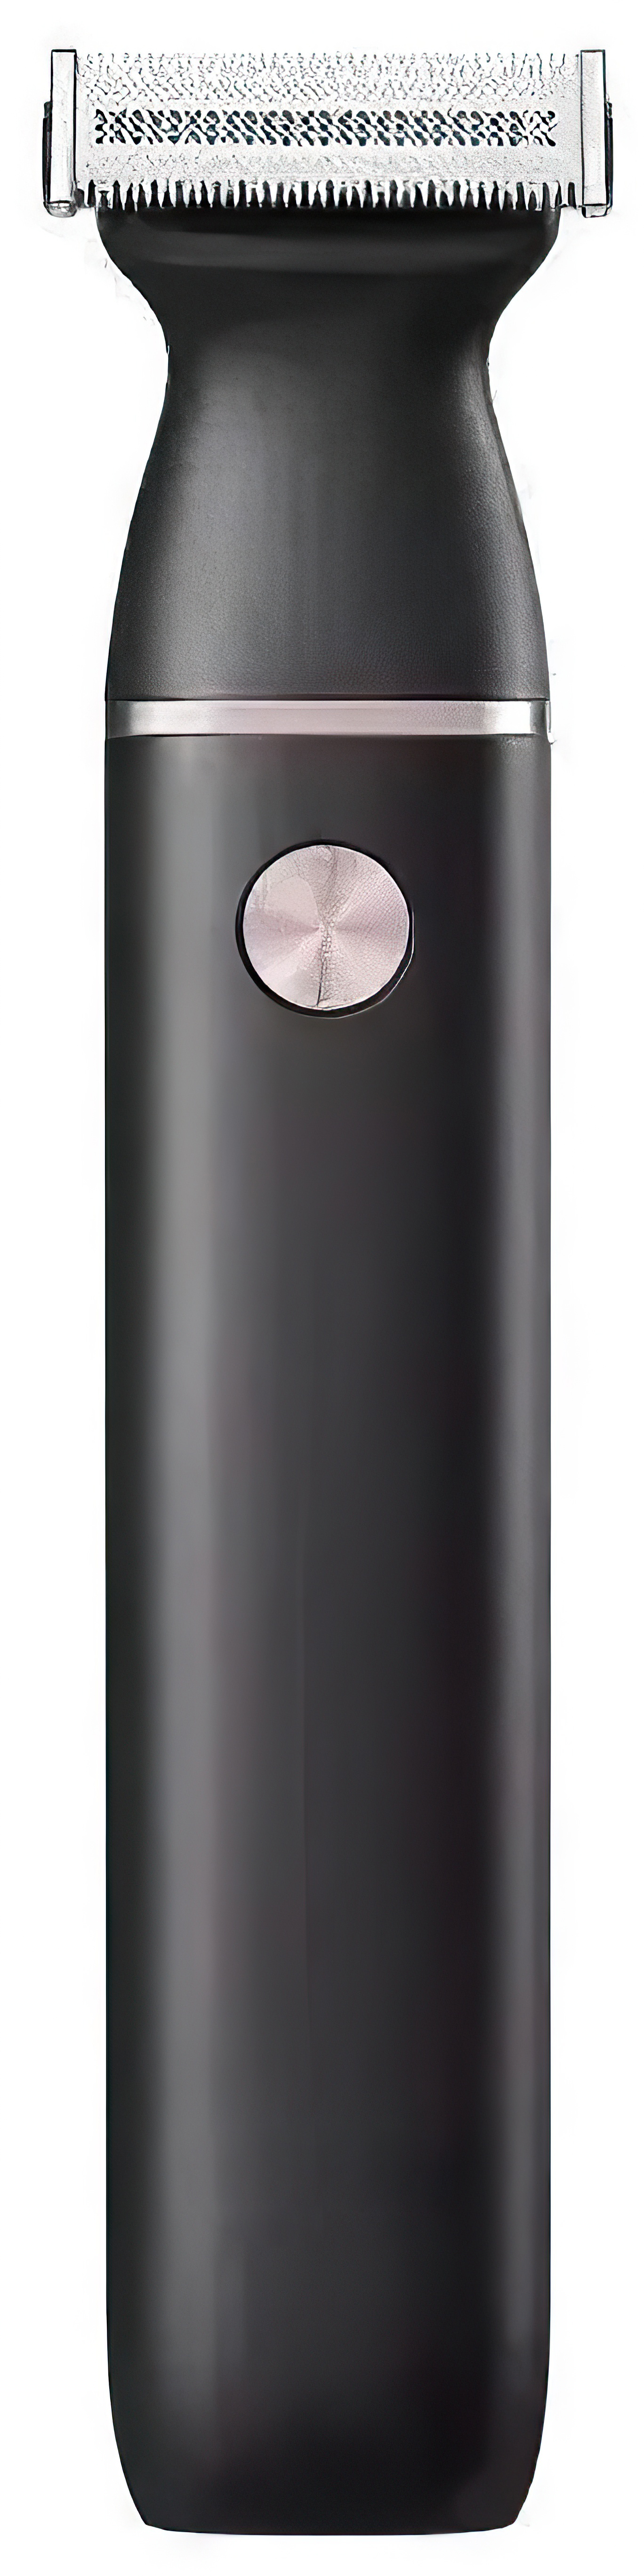 Электробритва Xiaomi Electric Shaver Small Razor (ET2) электробритва vgr voyager v 397 professional men s shaver